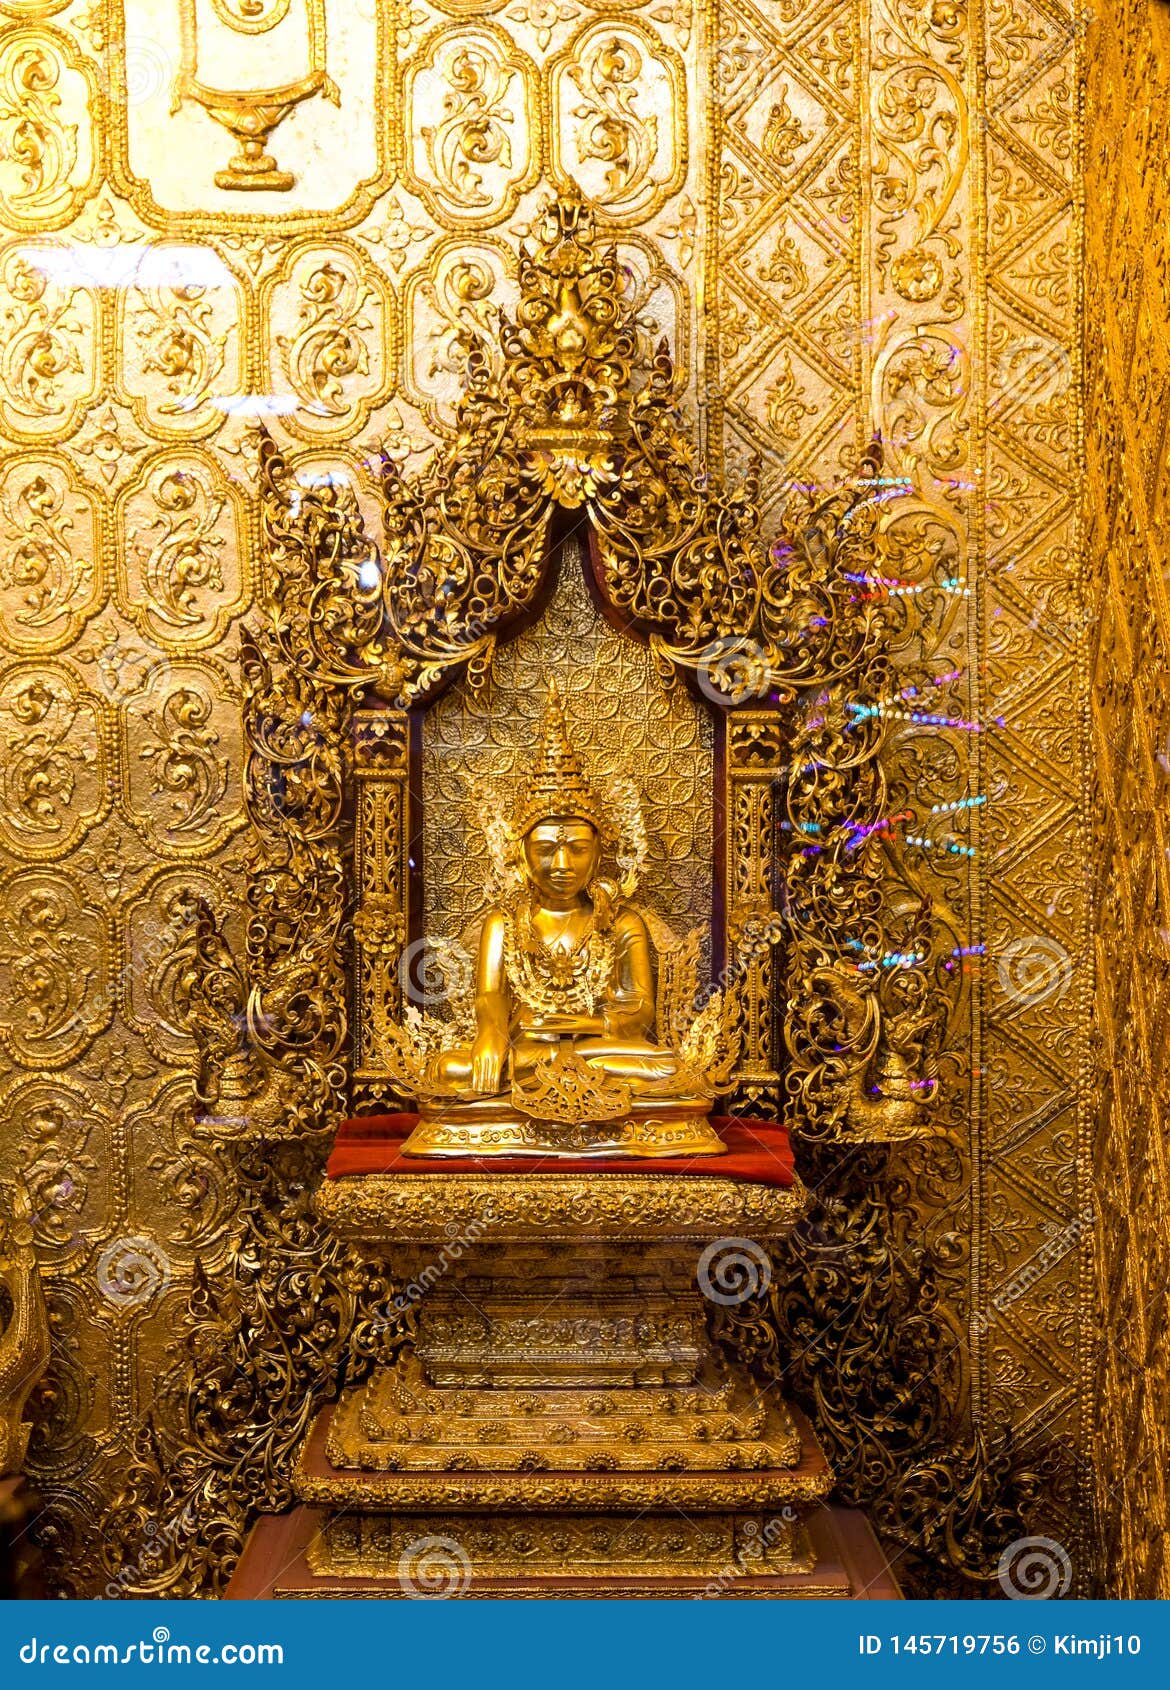 buddha myanmar art arches